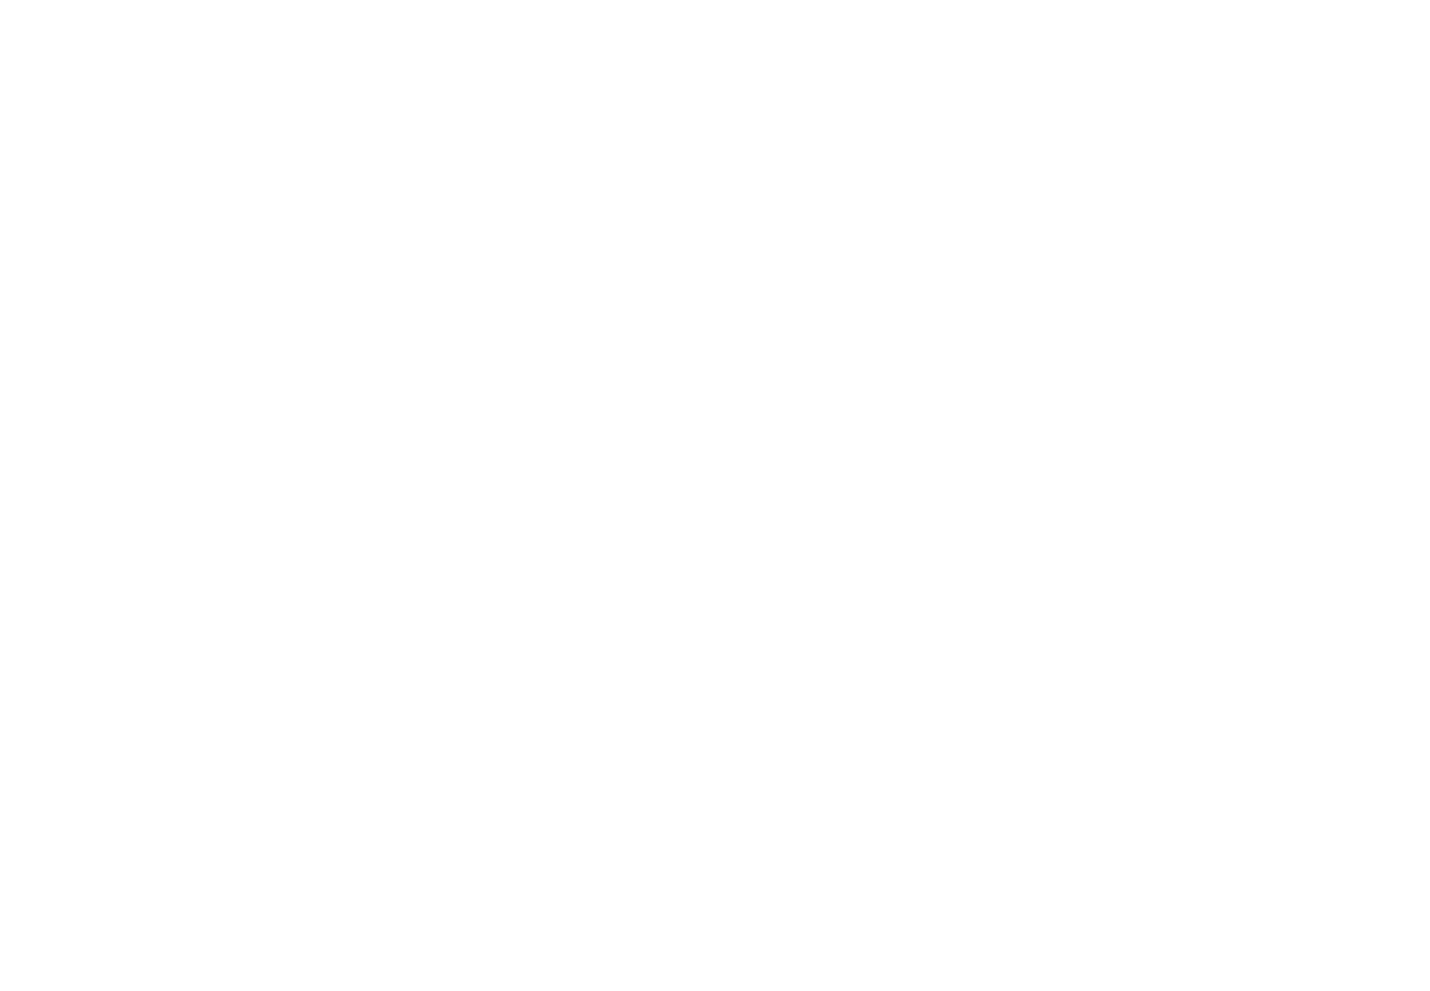 The Jimmy Carroll Foundation